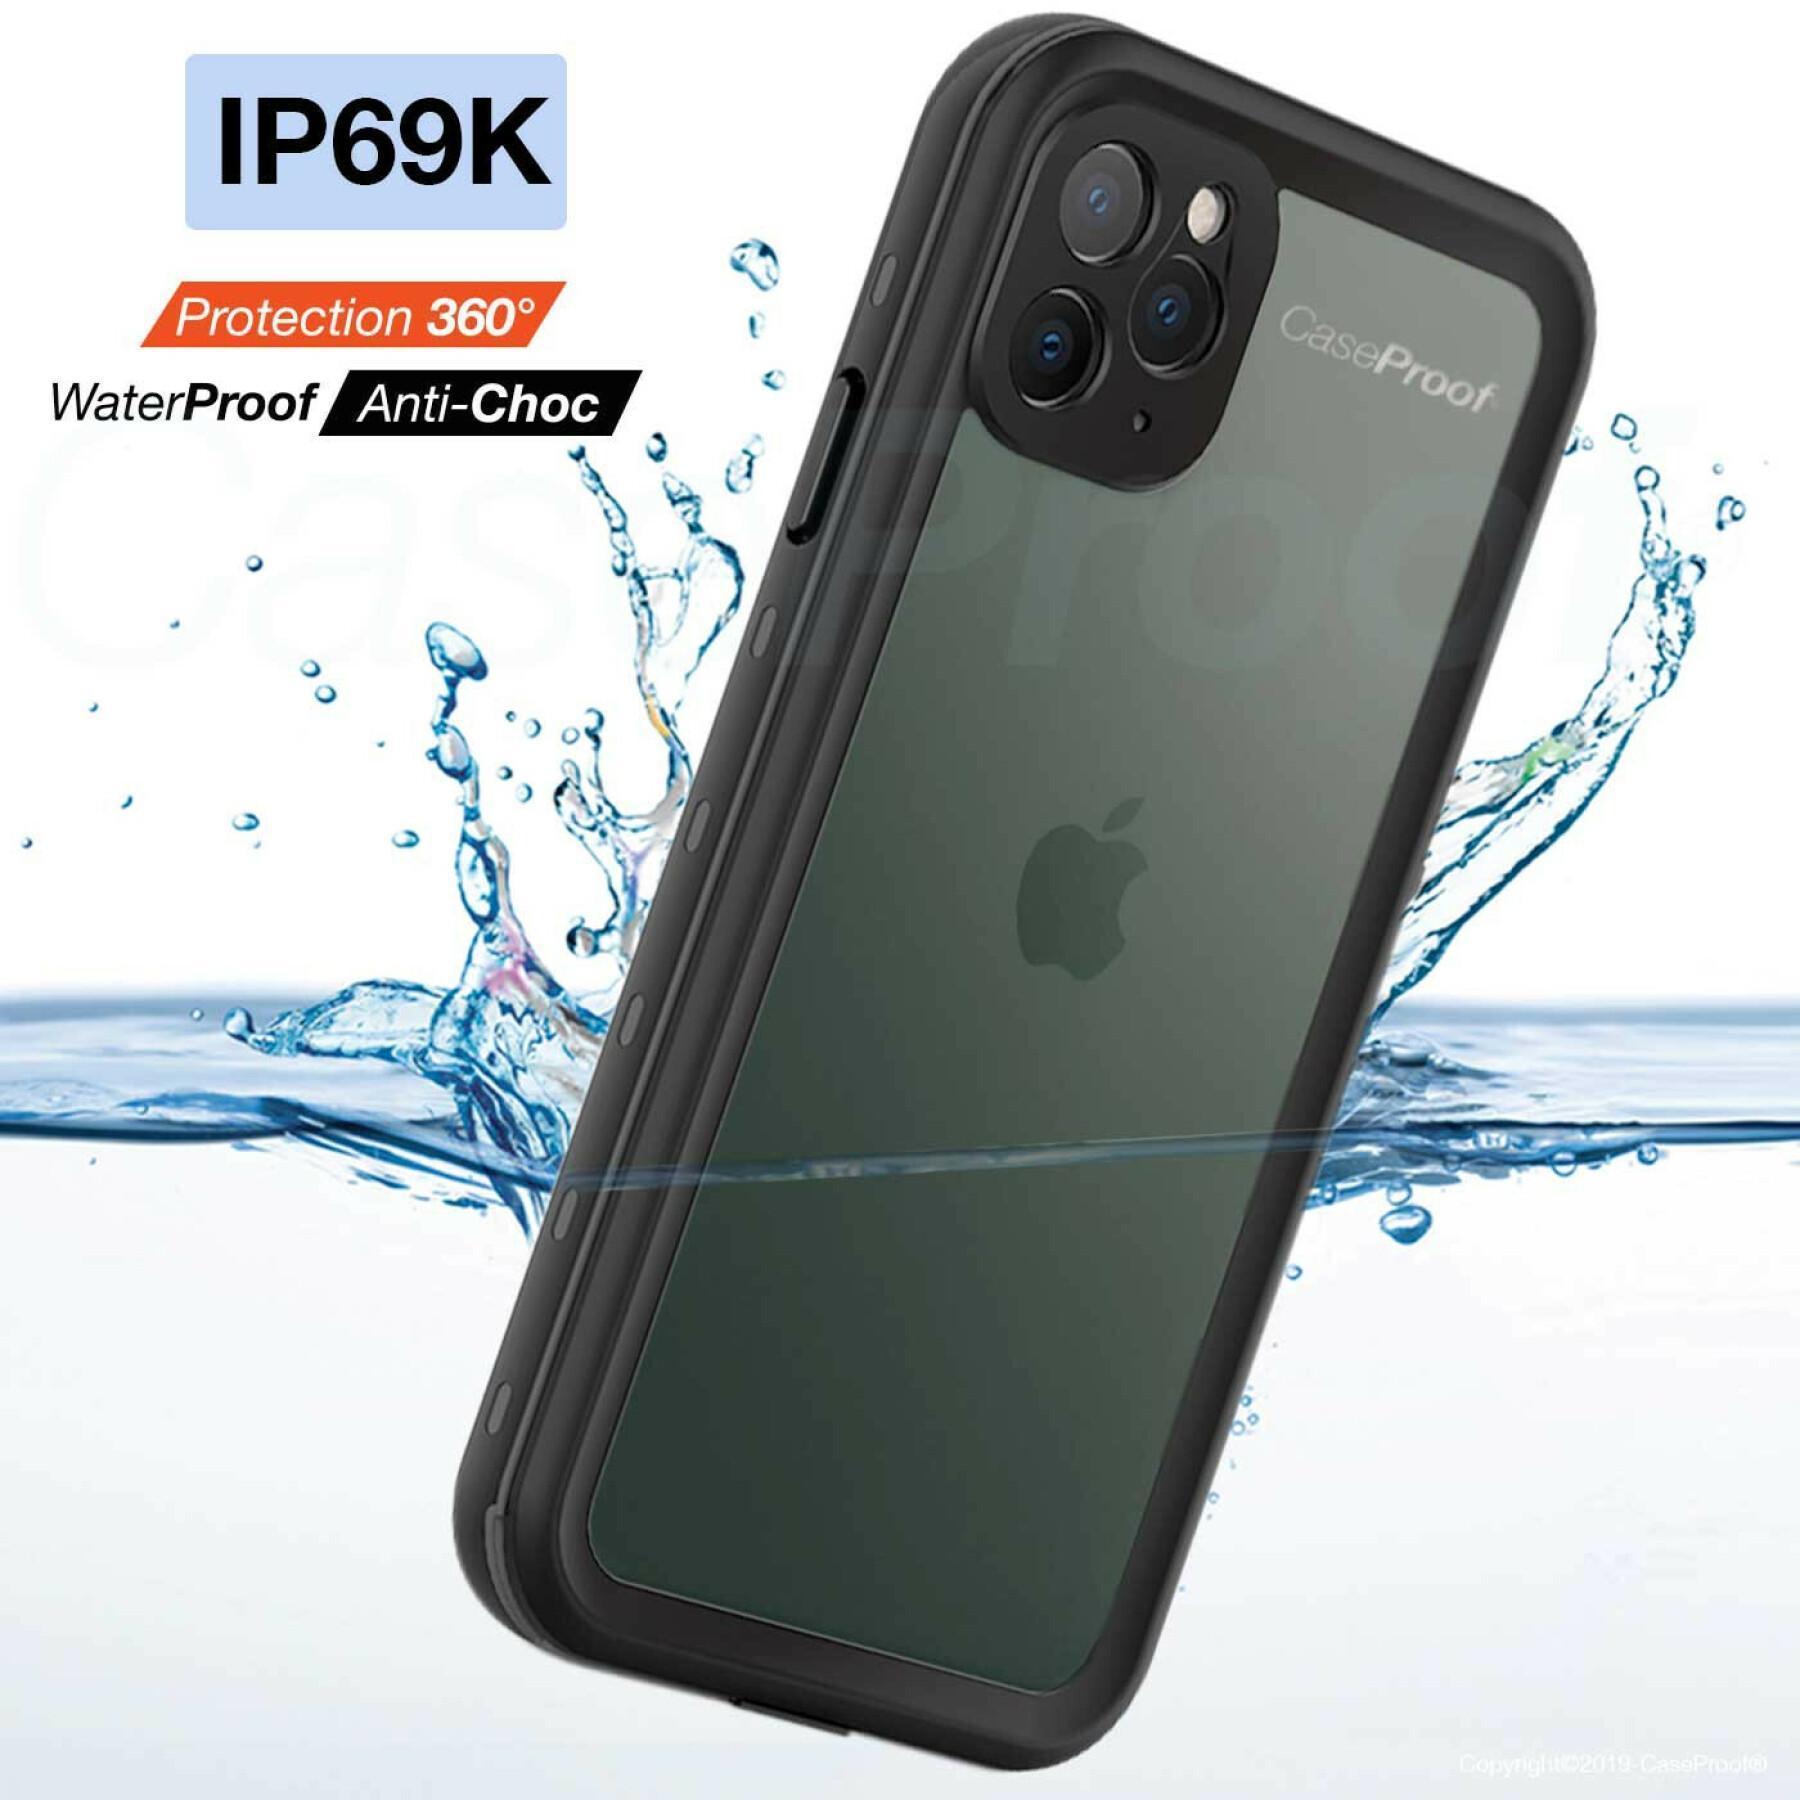 Smartphone-Hülle iphone 11 pro max waterproof wasserdicht und stoßfest CaseProof